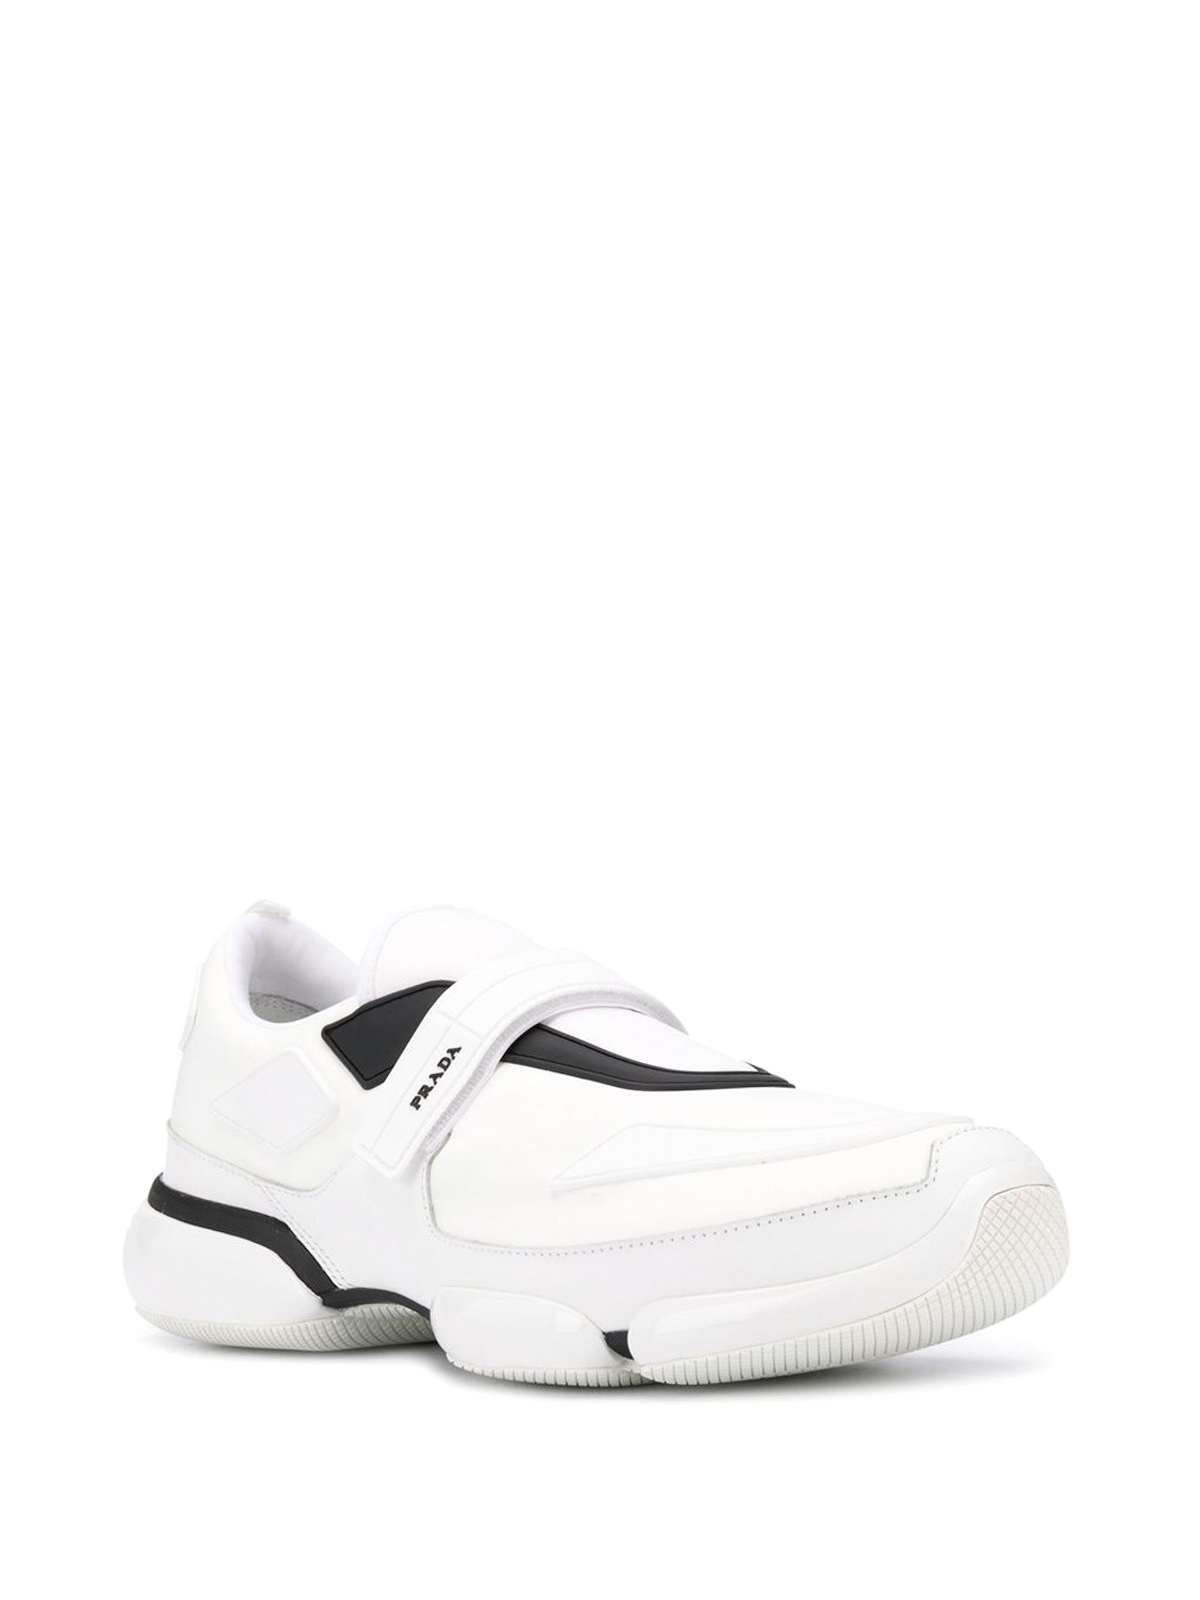 Trainers Prada - Cloudbust white sneakers - 2OG0662ODJ009 